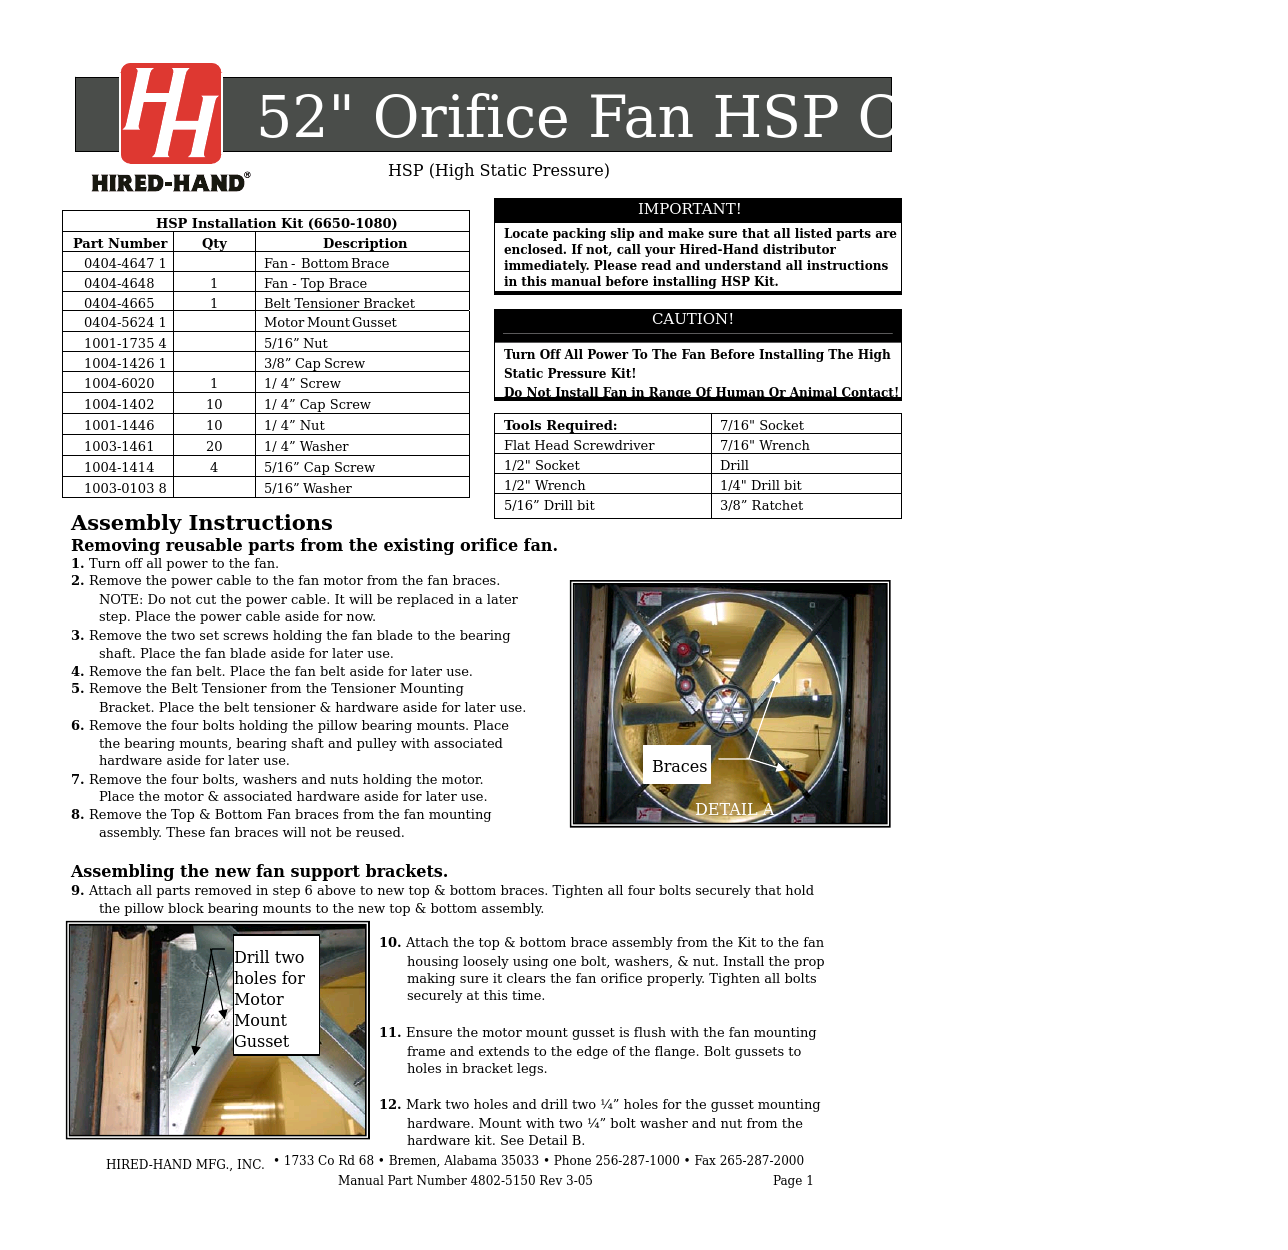 Circulation and Stir Fans: 52 Orifice Fan HSP Conversion Kit